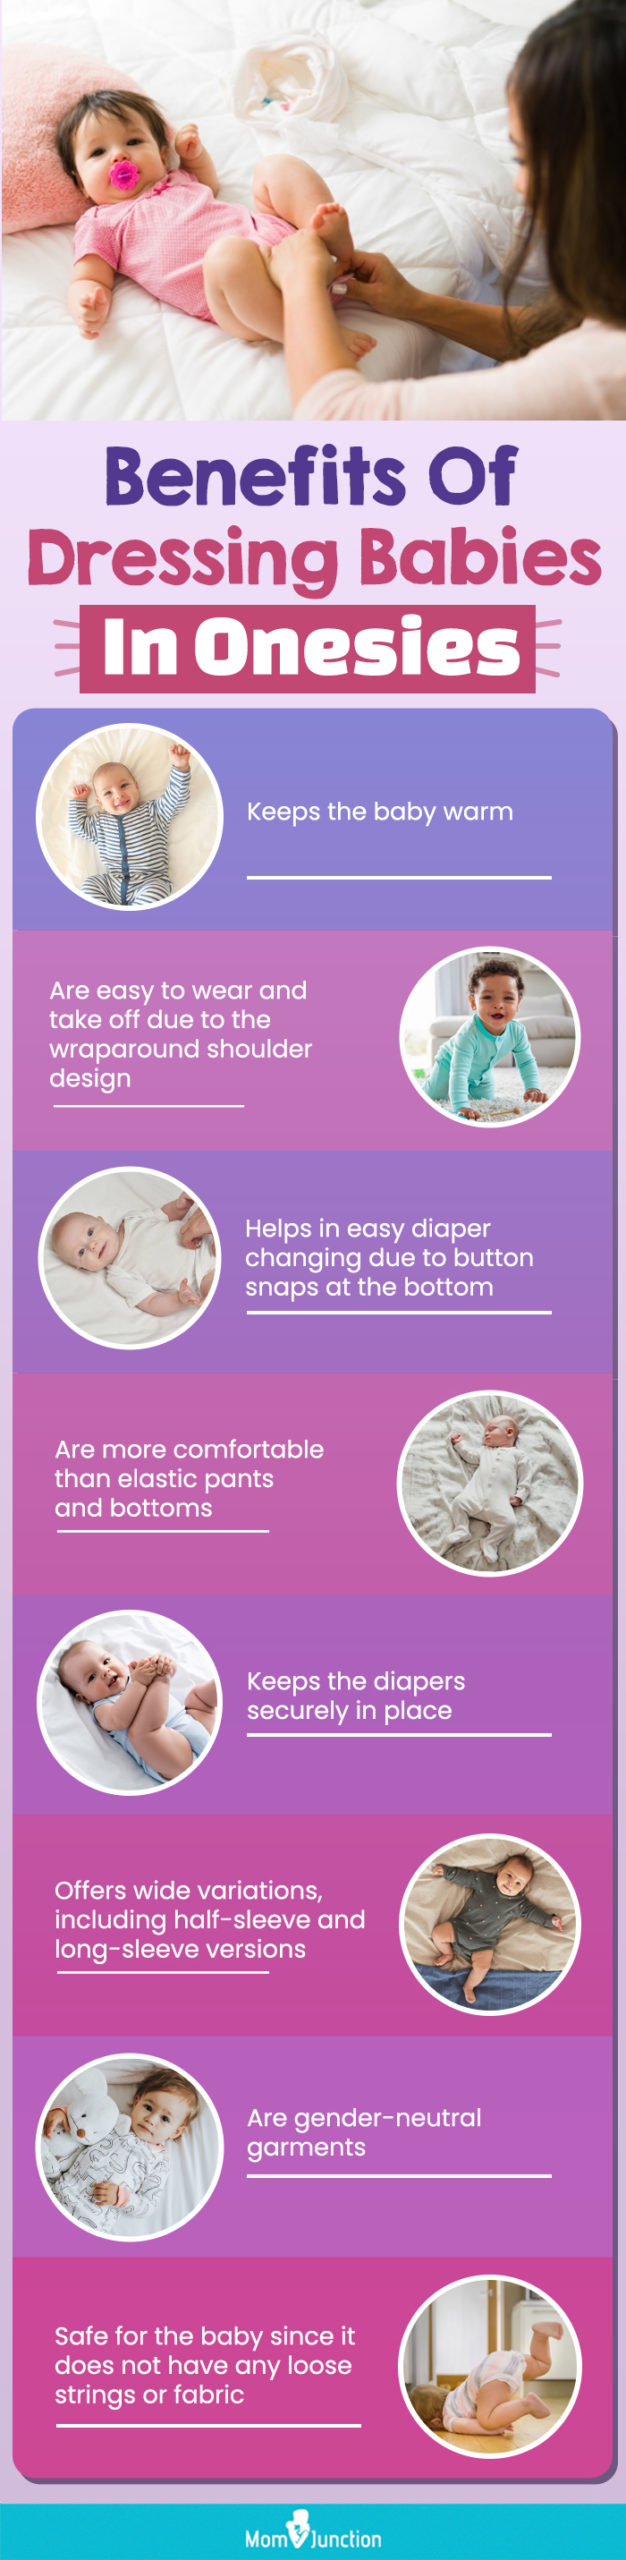 Benefits Of Dressing Babies In Onesies (infographic)